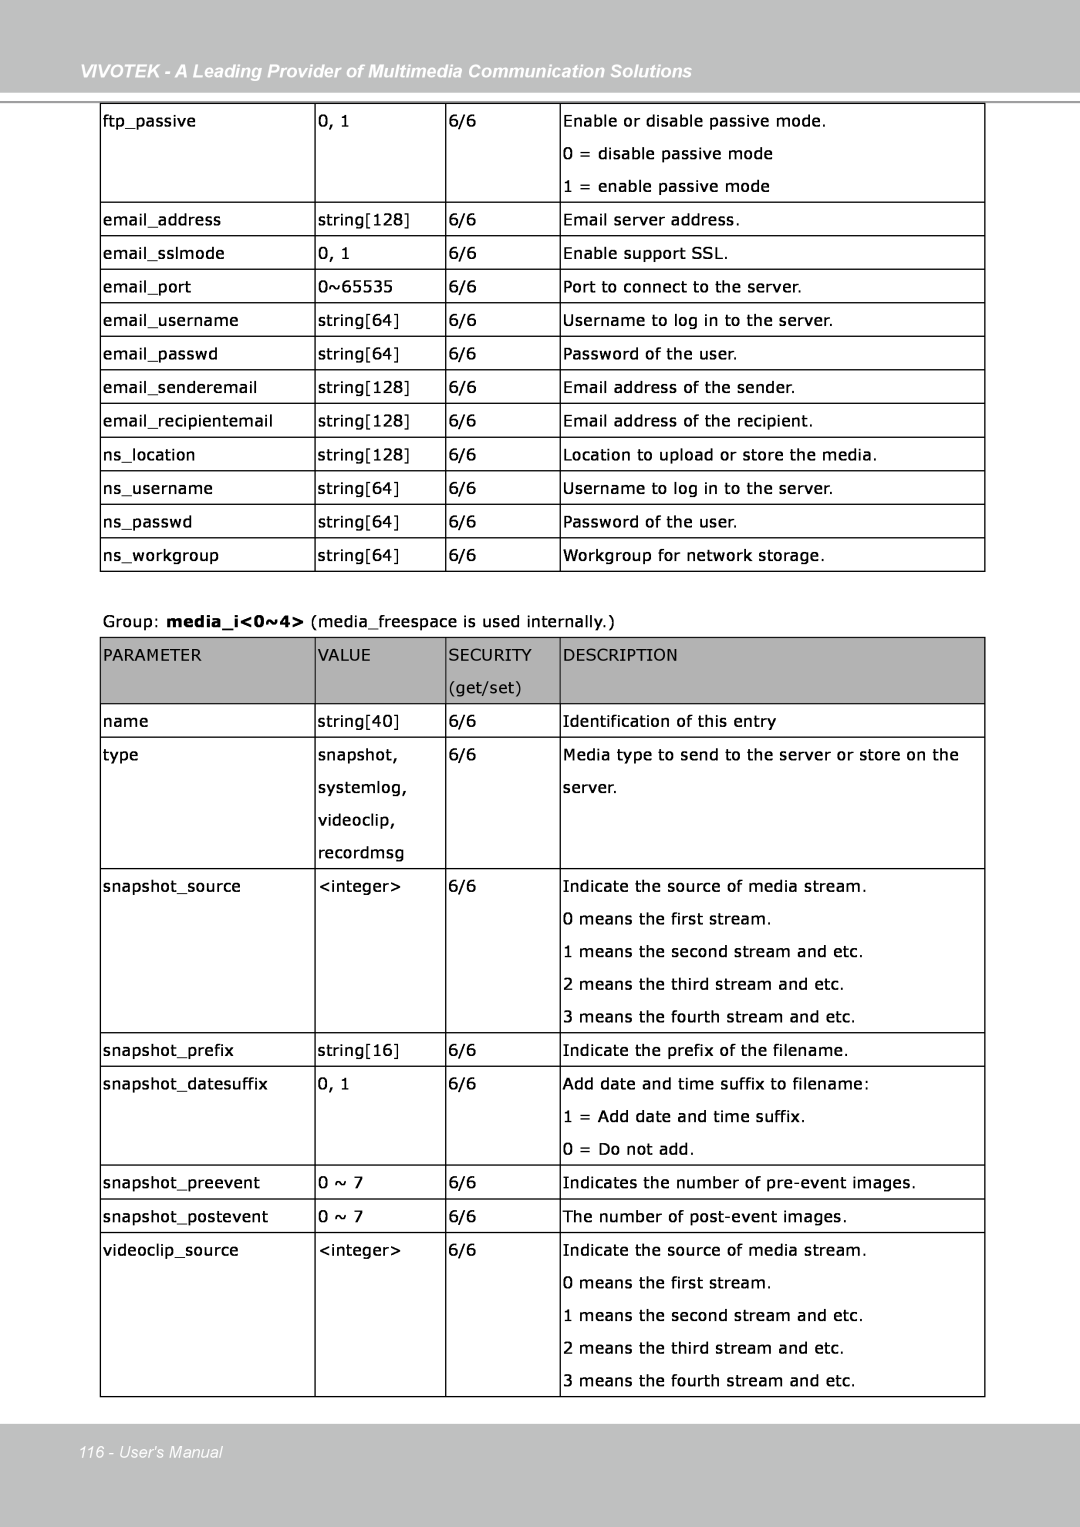 Vivotek FD7141(V) manual Users Manual 